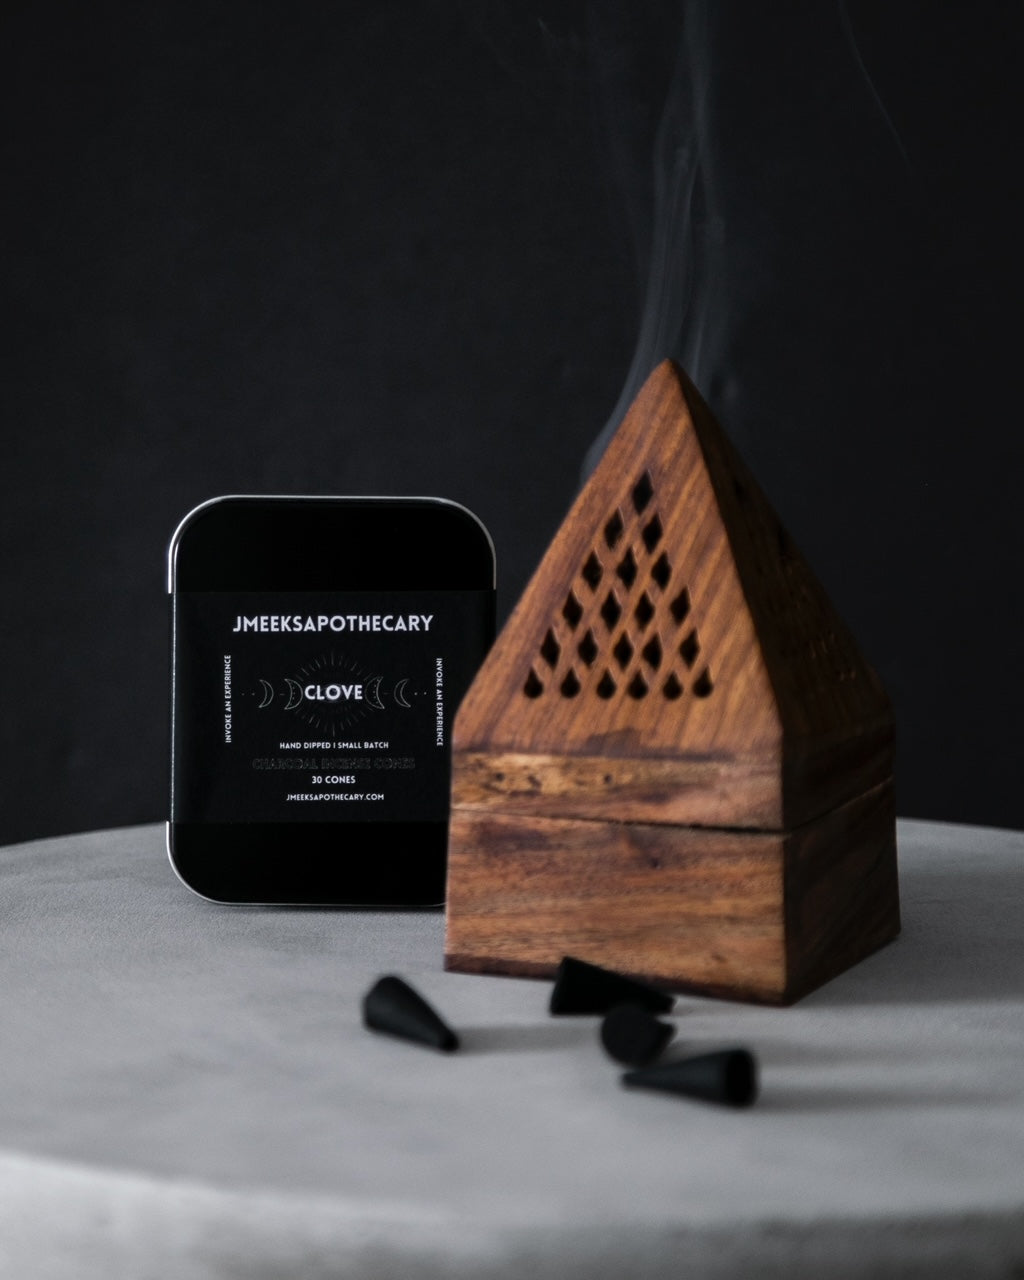 Charcoal incense cones